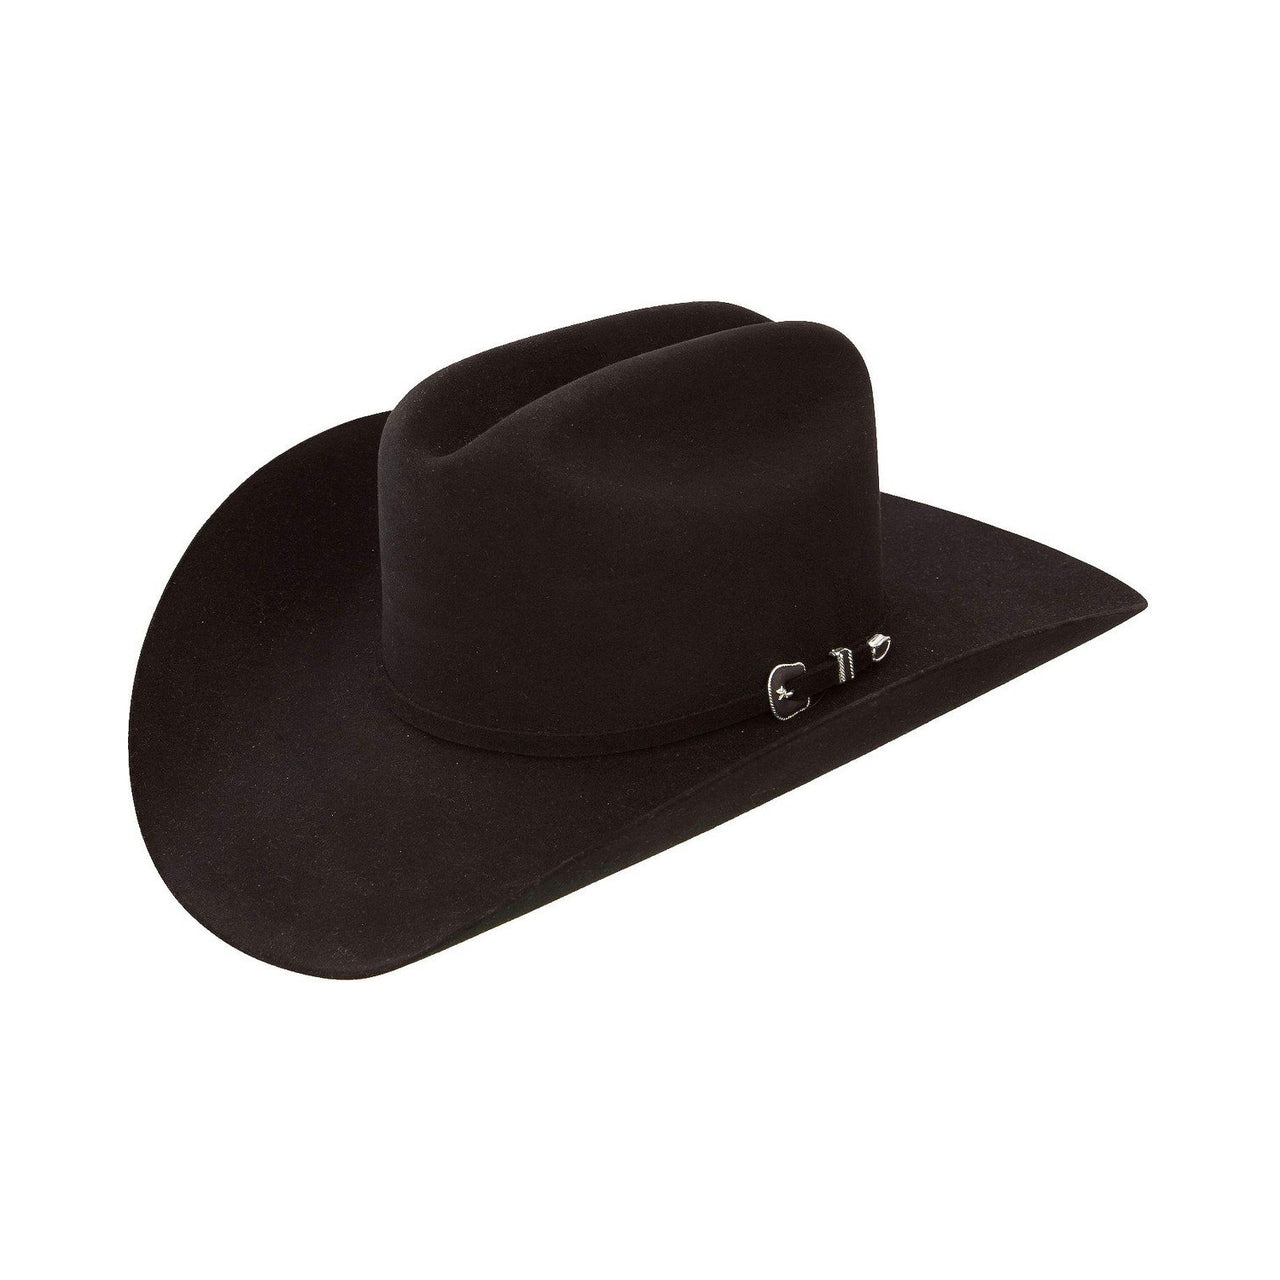 Resistol City Limits Felt Cowboy Hat - Black